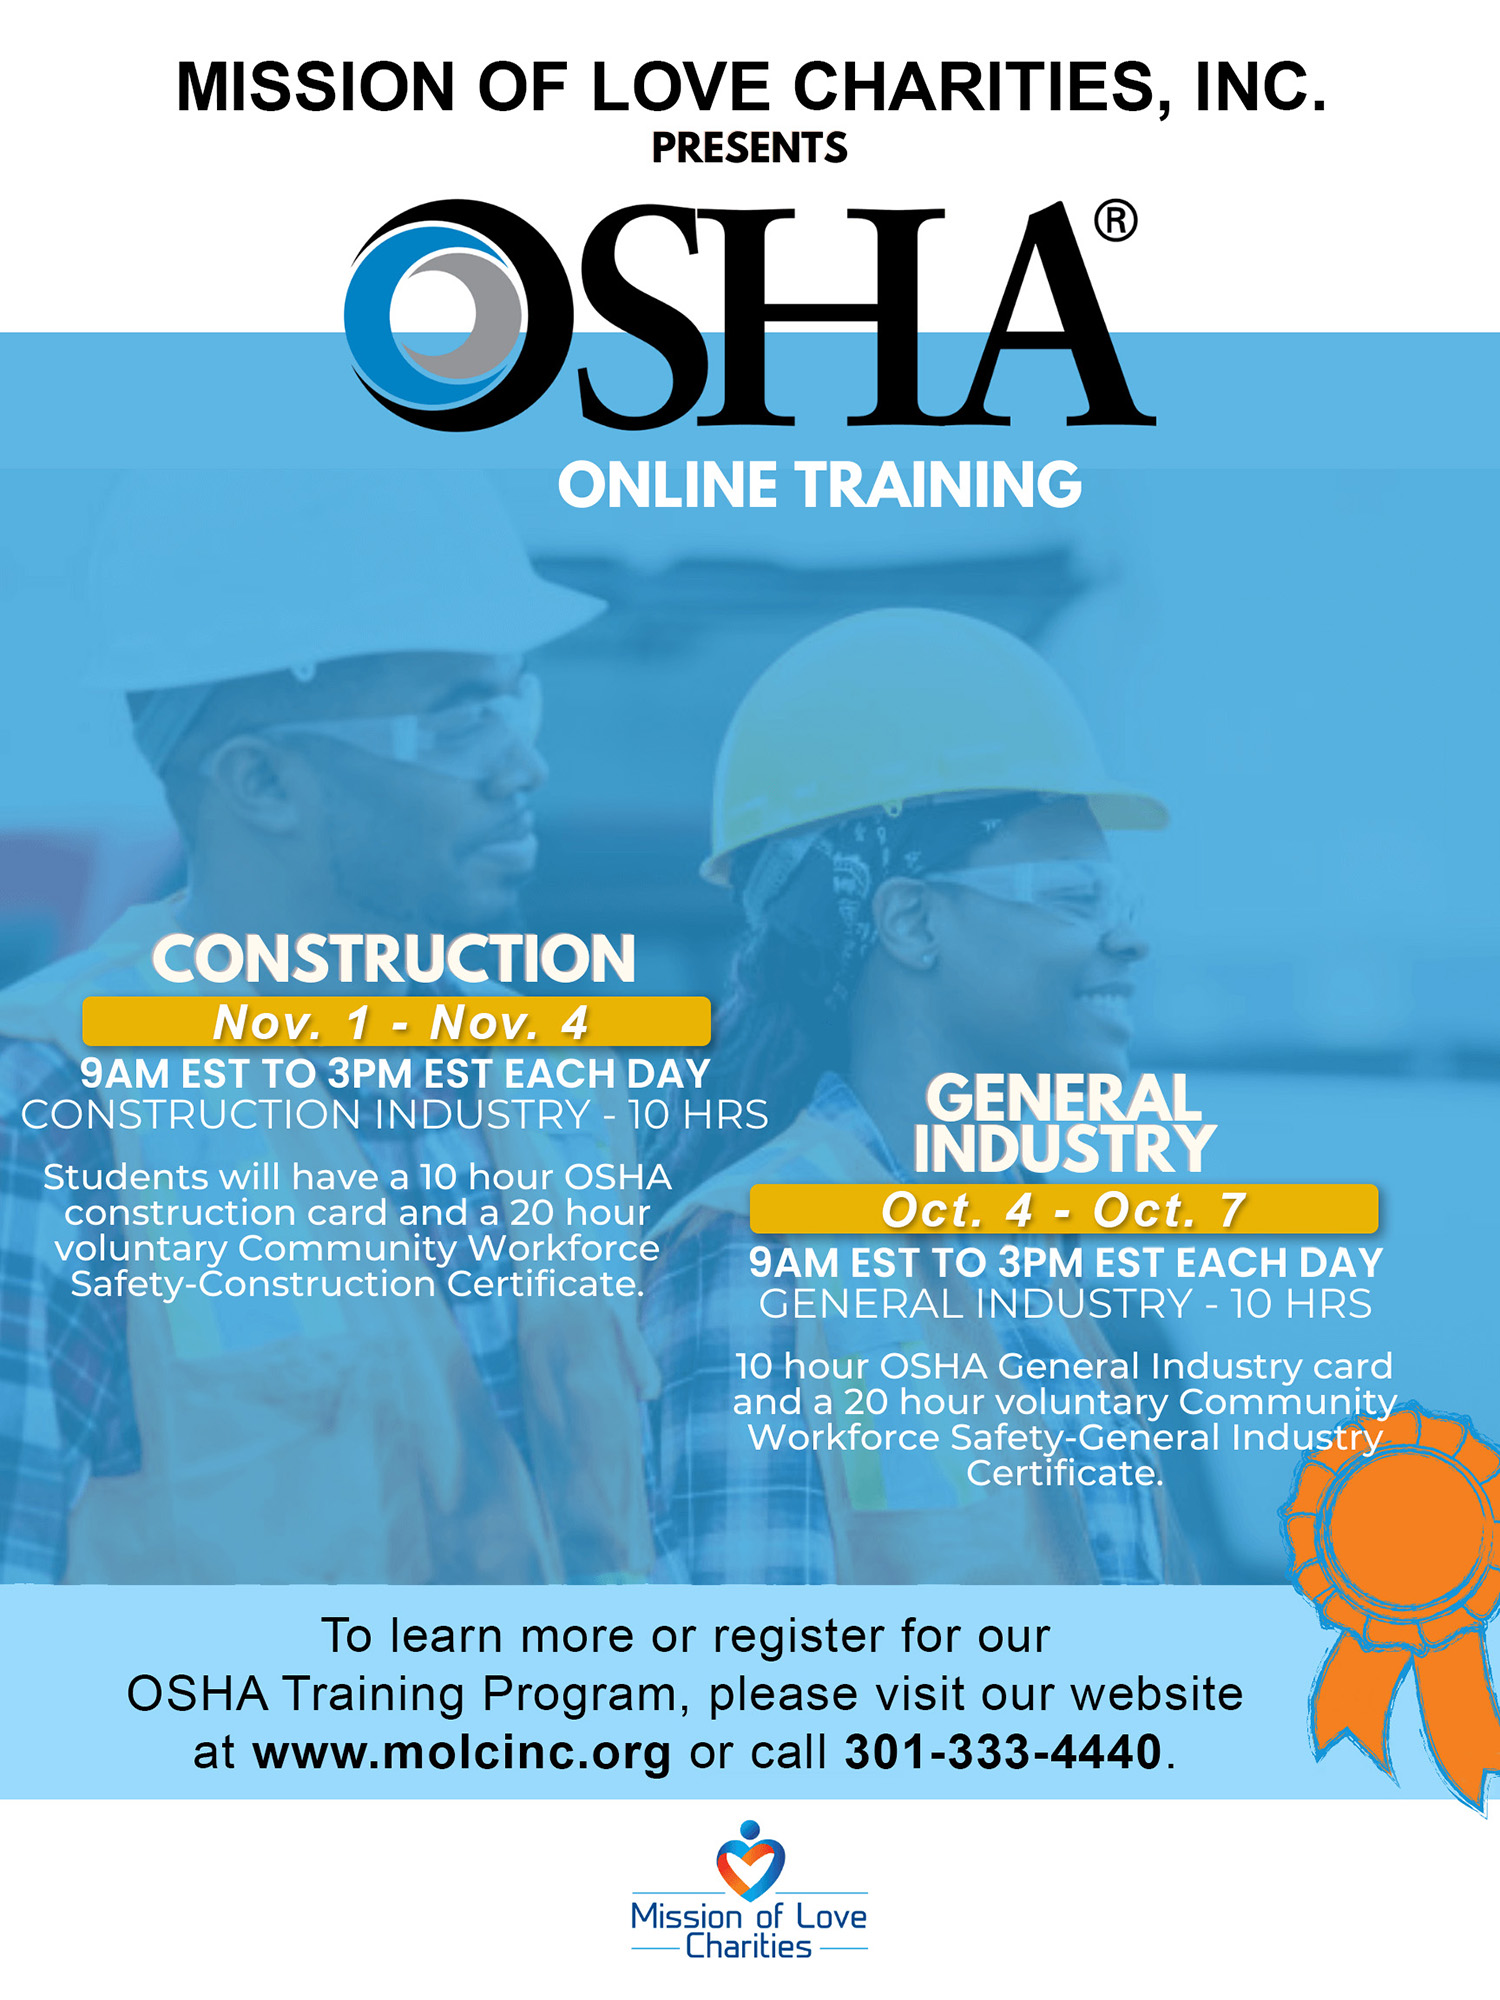 OSHA Construction Training